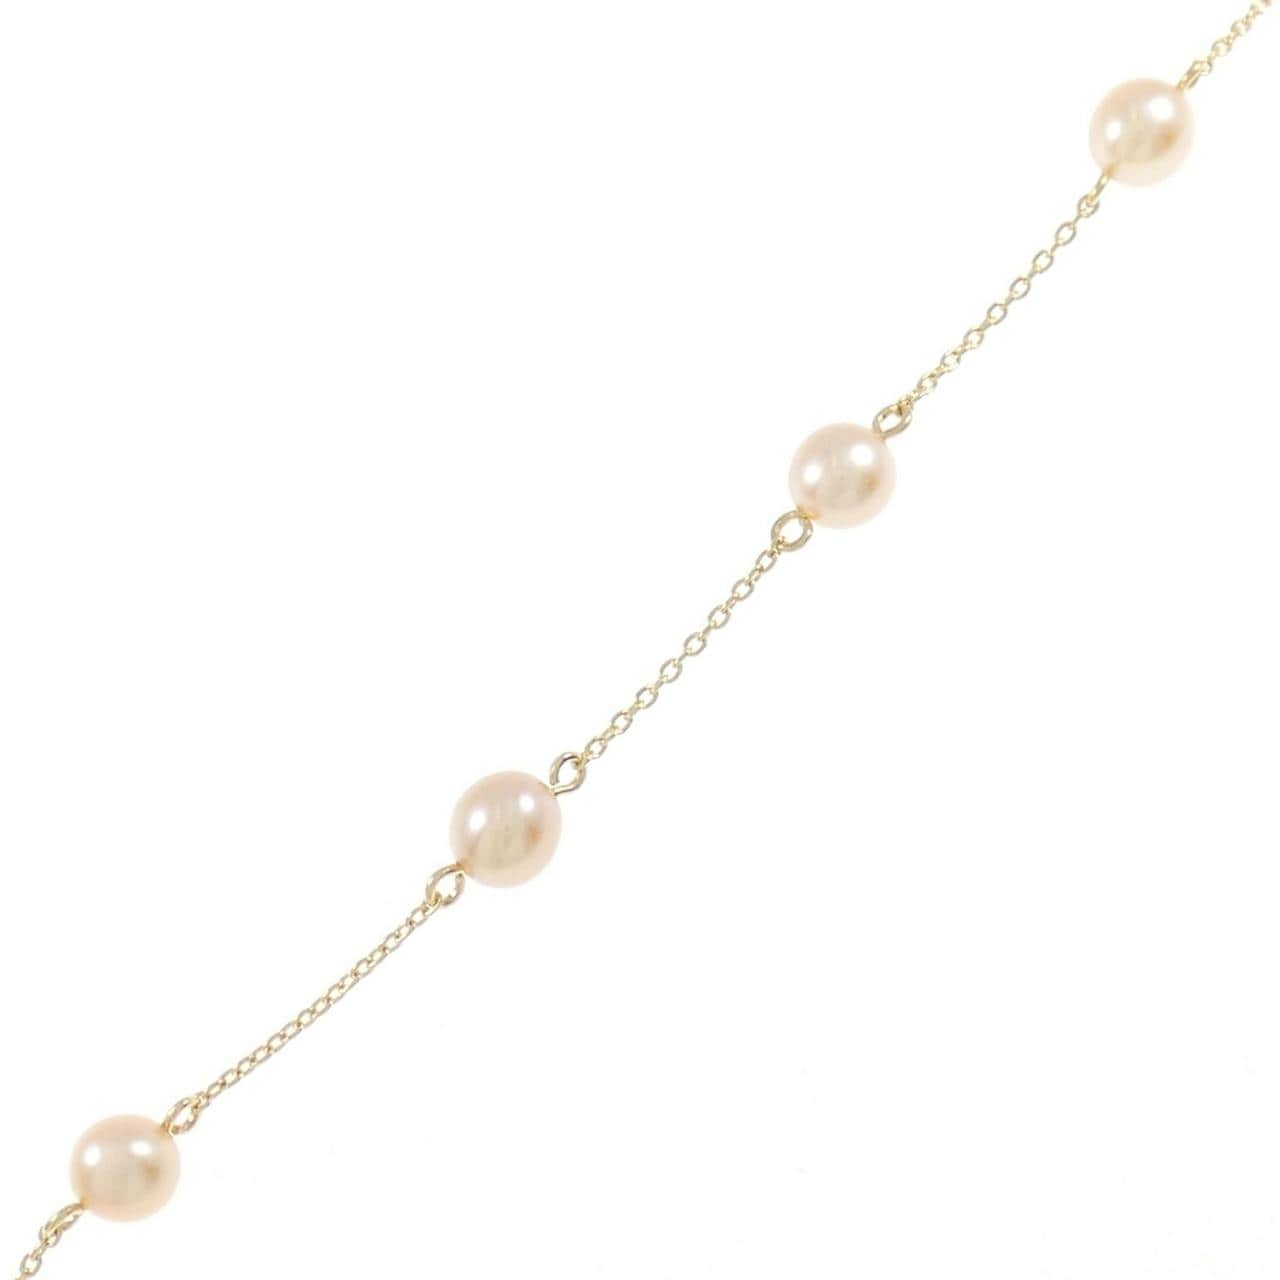 Tasaki freshwater pearl bracelet 5.5mm